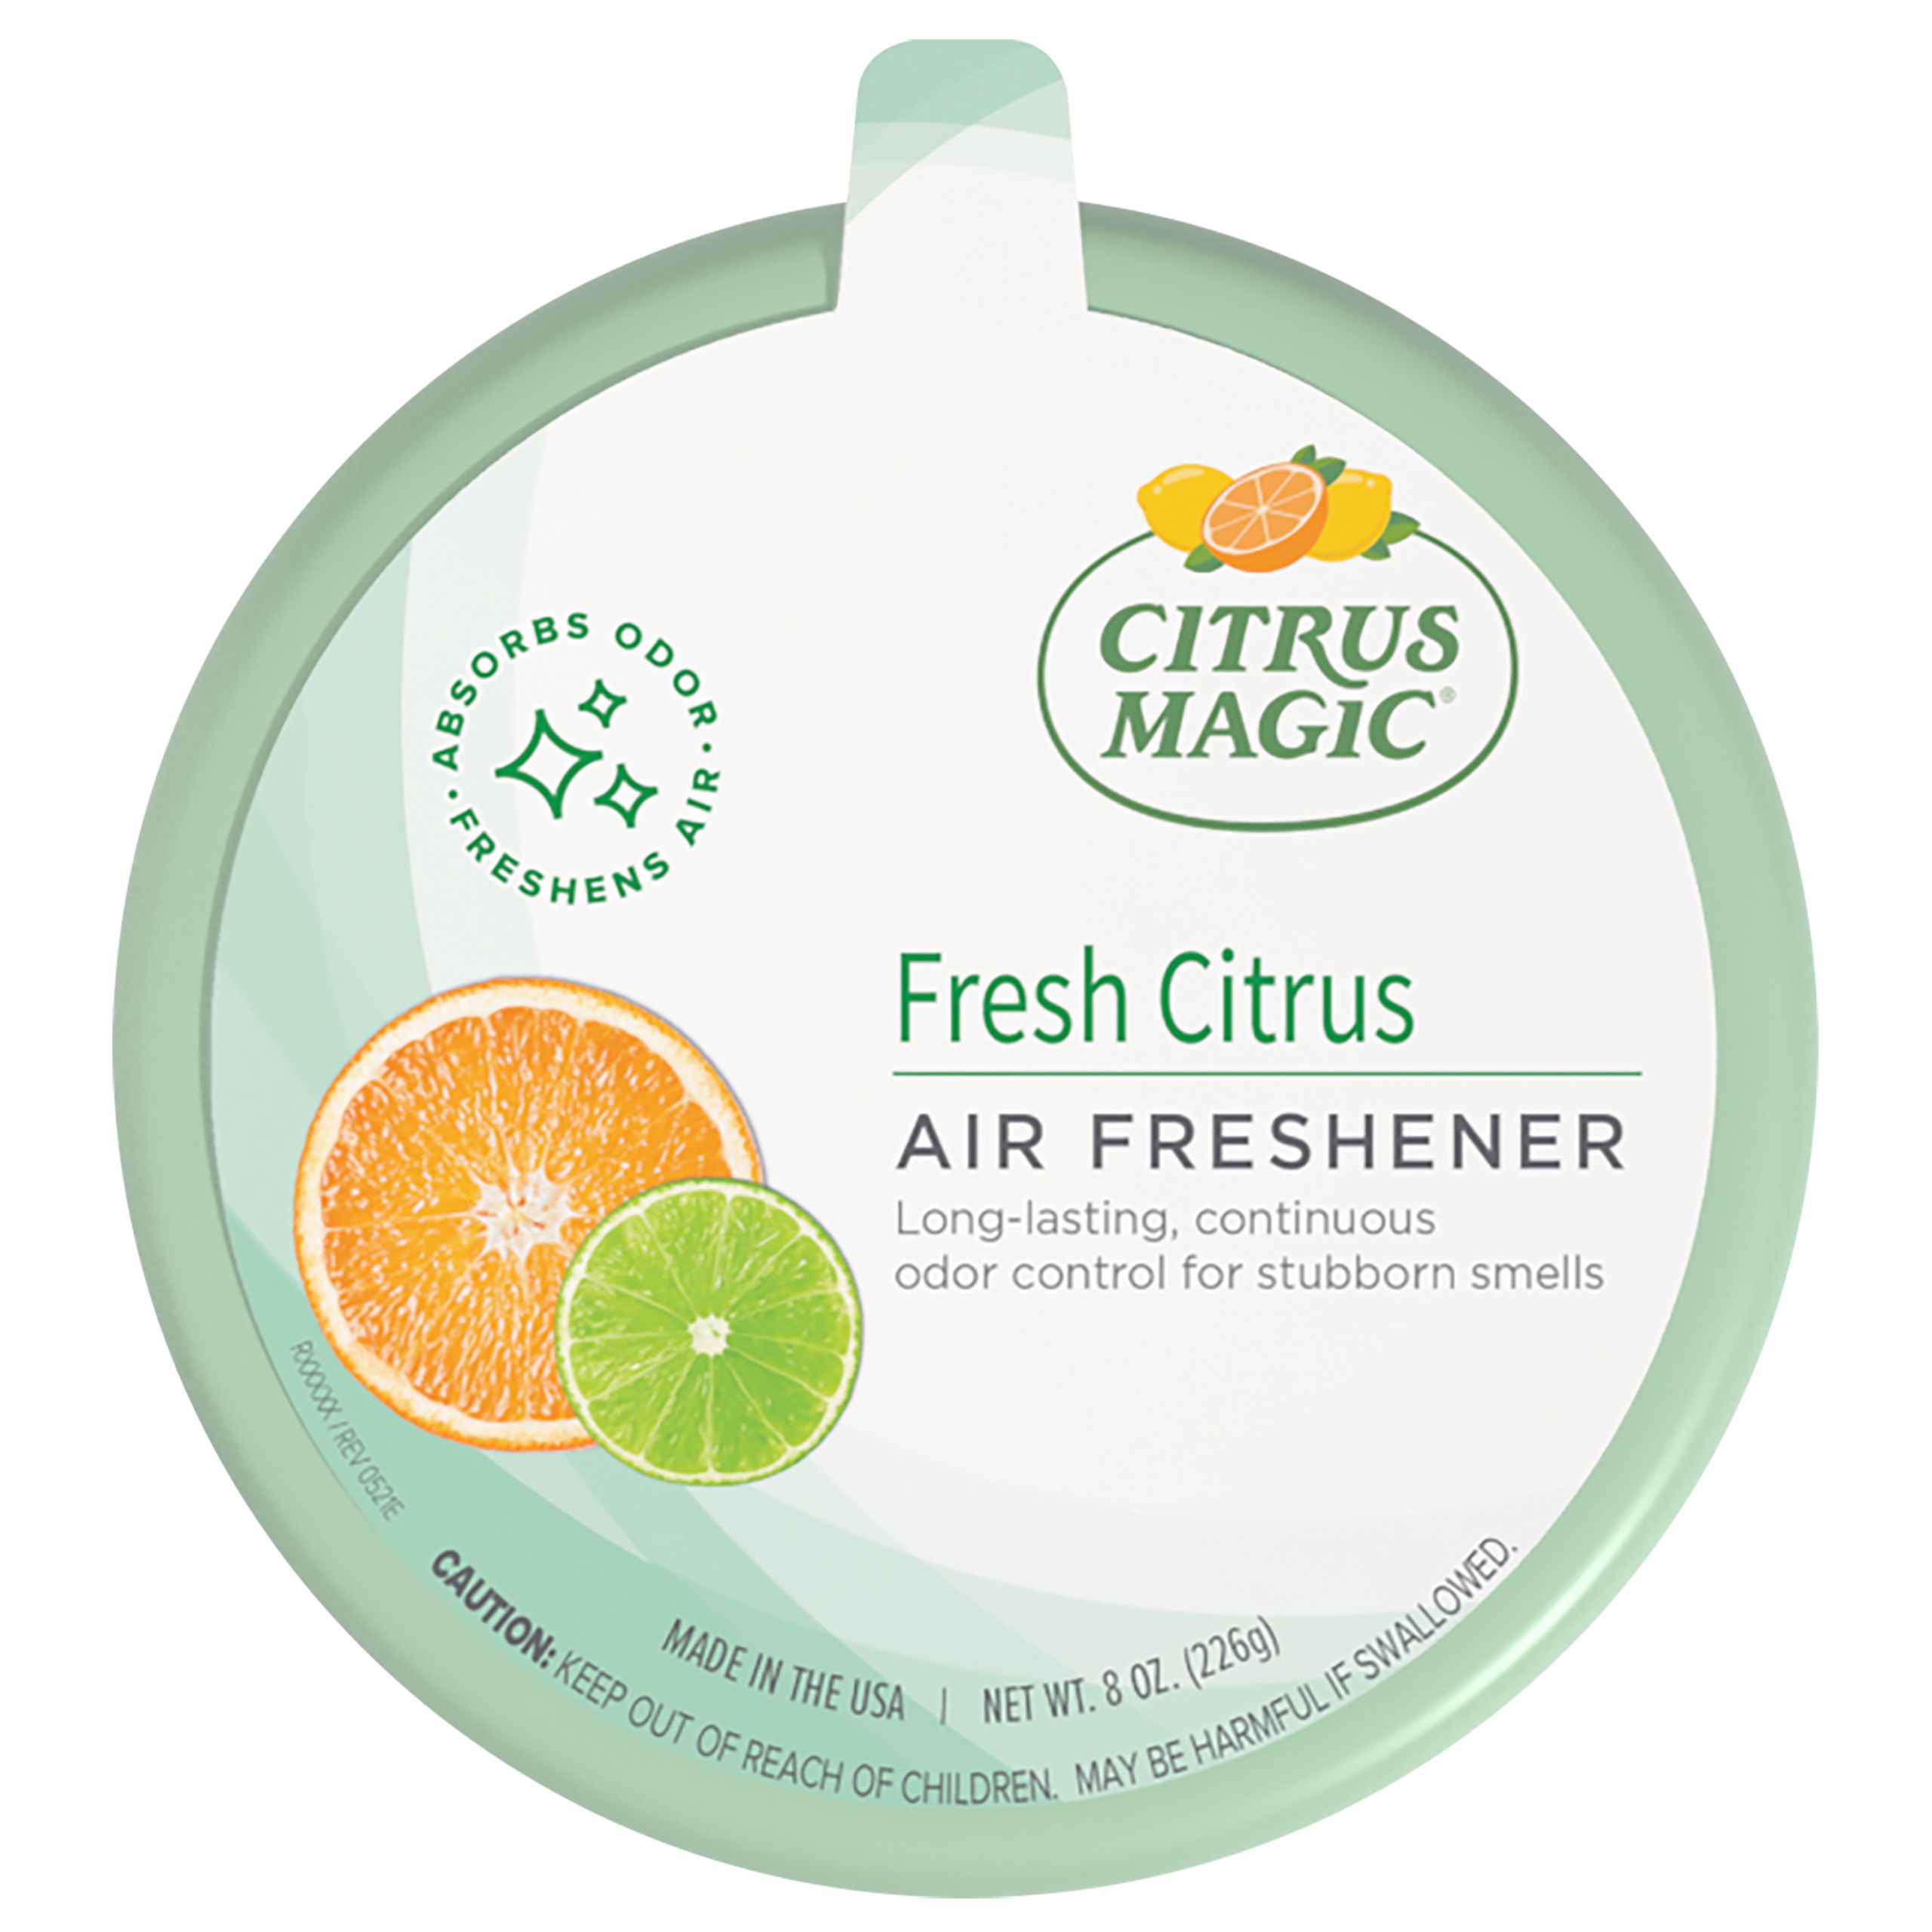 Magic fresh. Фреш Мэджик освежитель воздуха. Milo perfetto 150gr Citrus Fresh. Паста Бионик цитрус Фреш. Dubai Air Freshener.